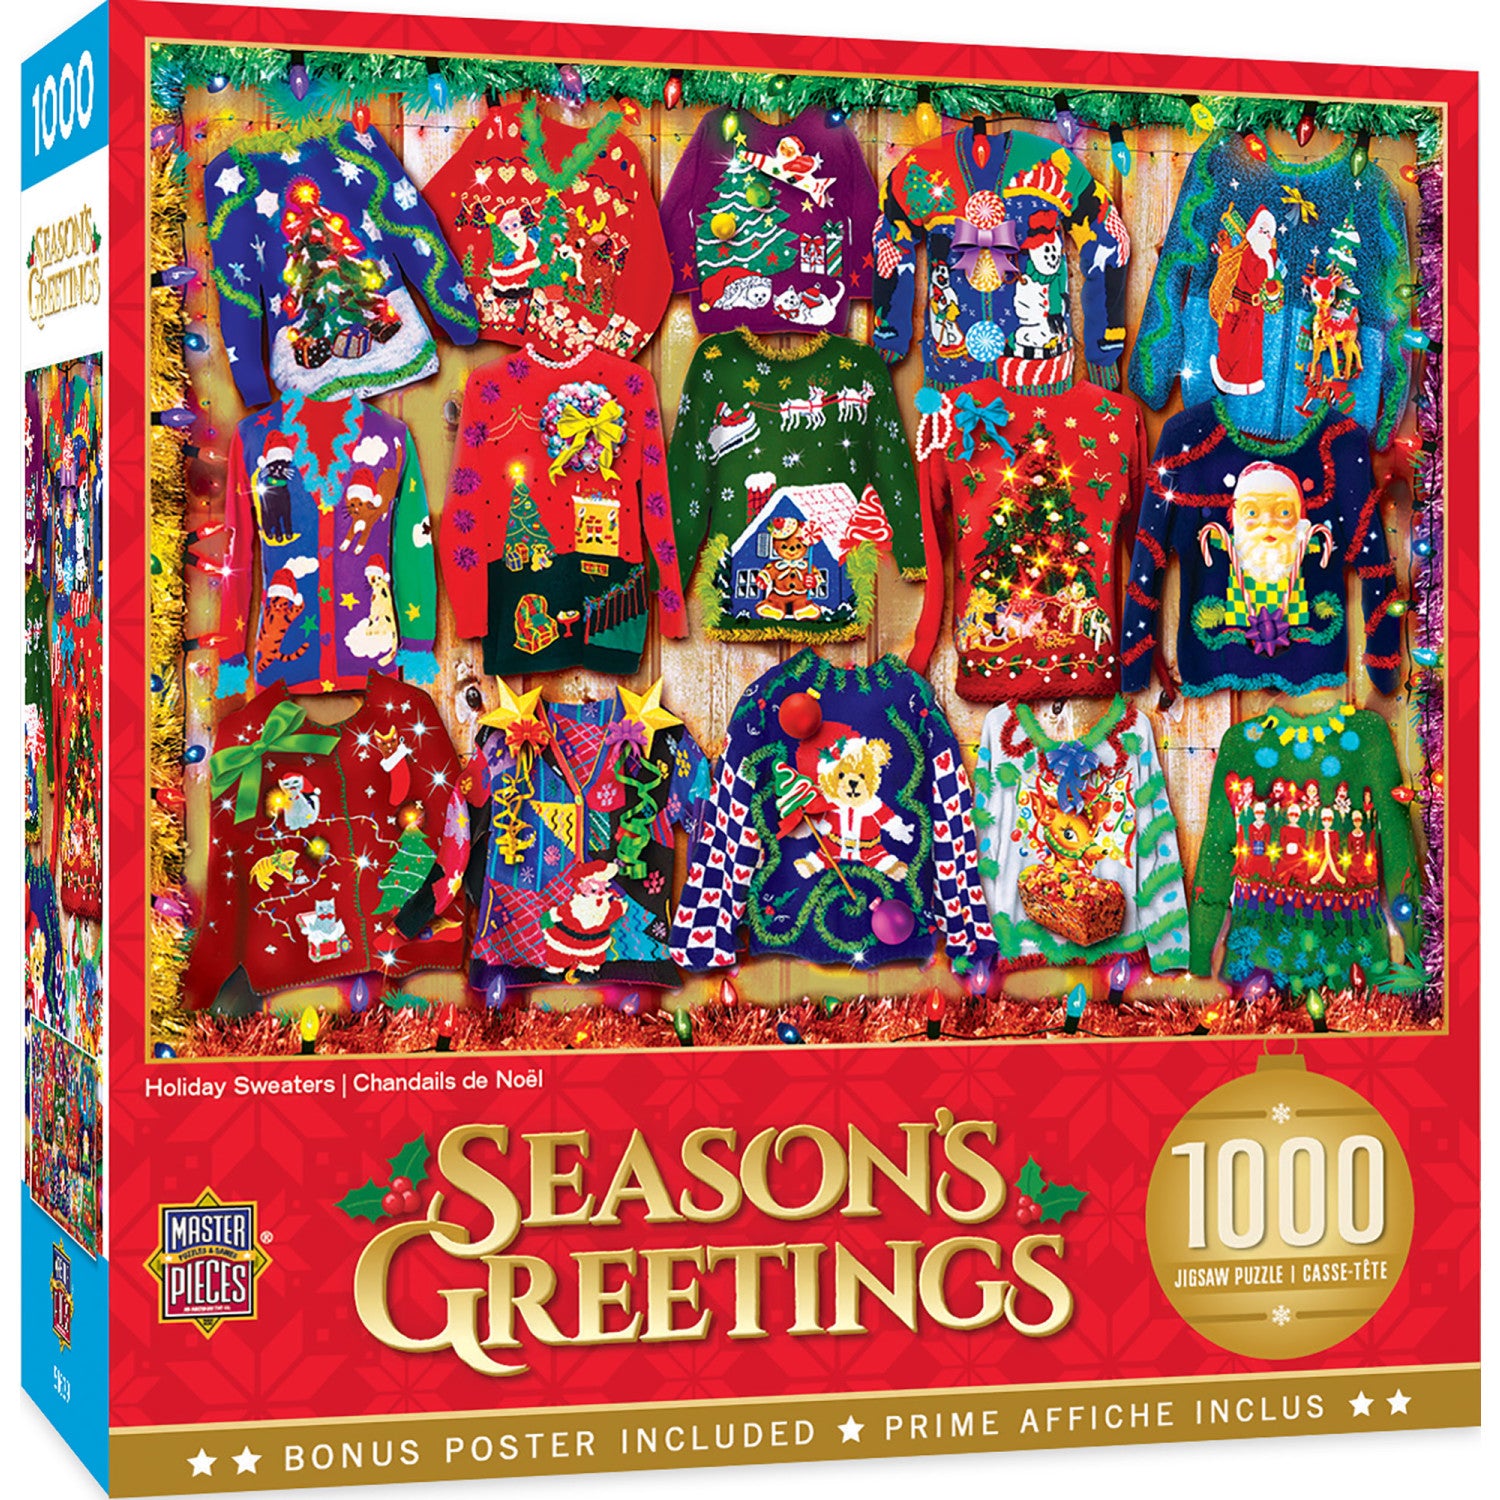 Season's Greetings - Holiday Sweaters 1000 Piece Jigsaw Puzzle